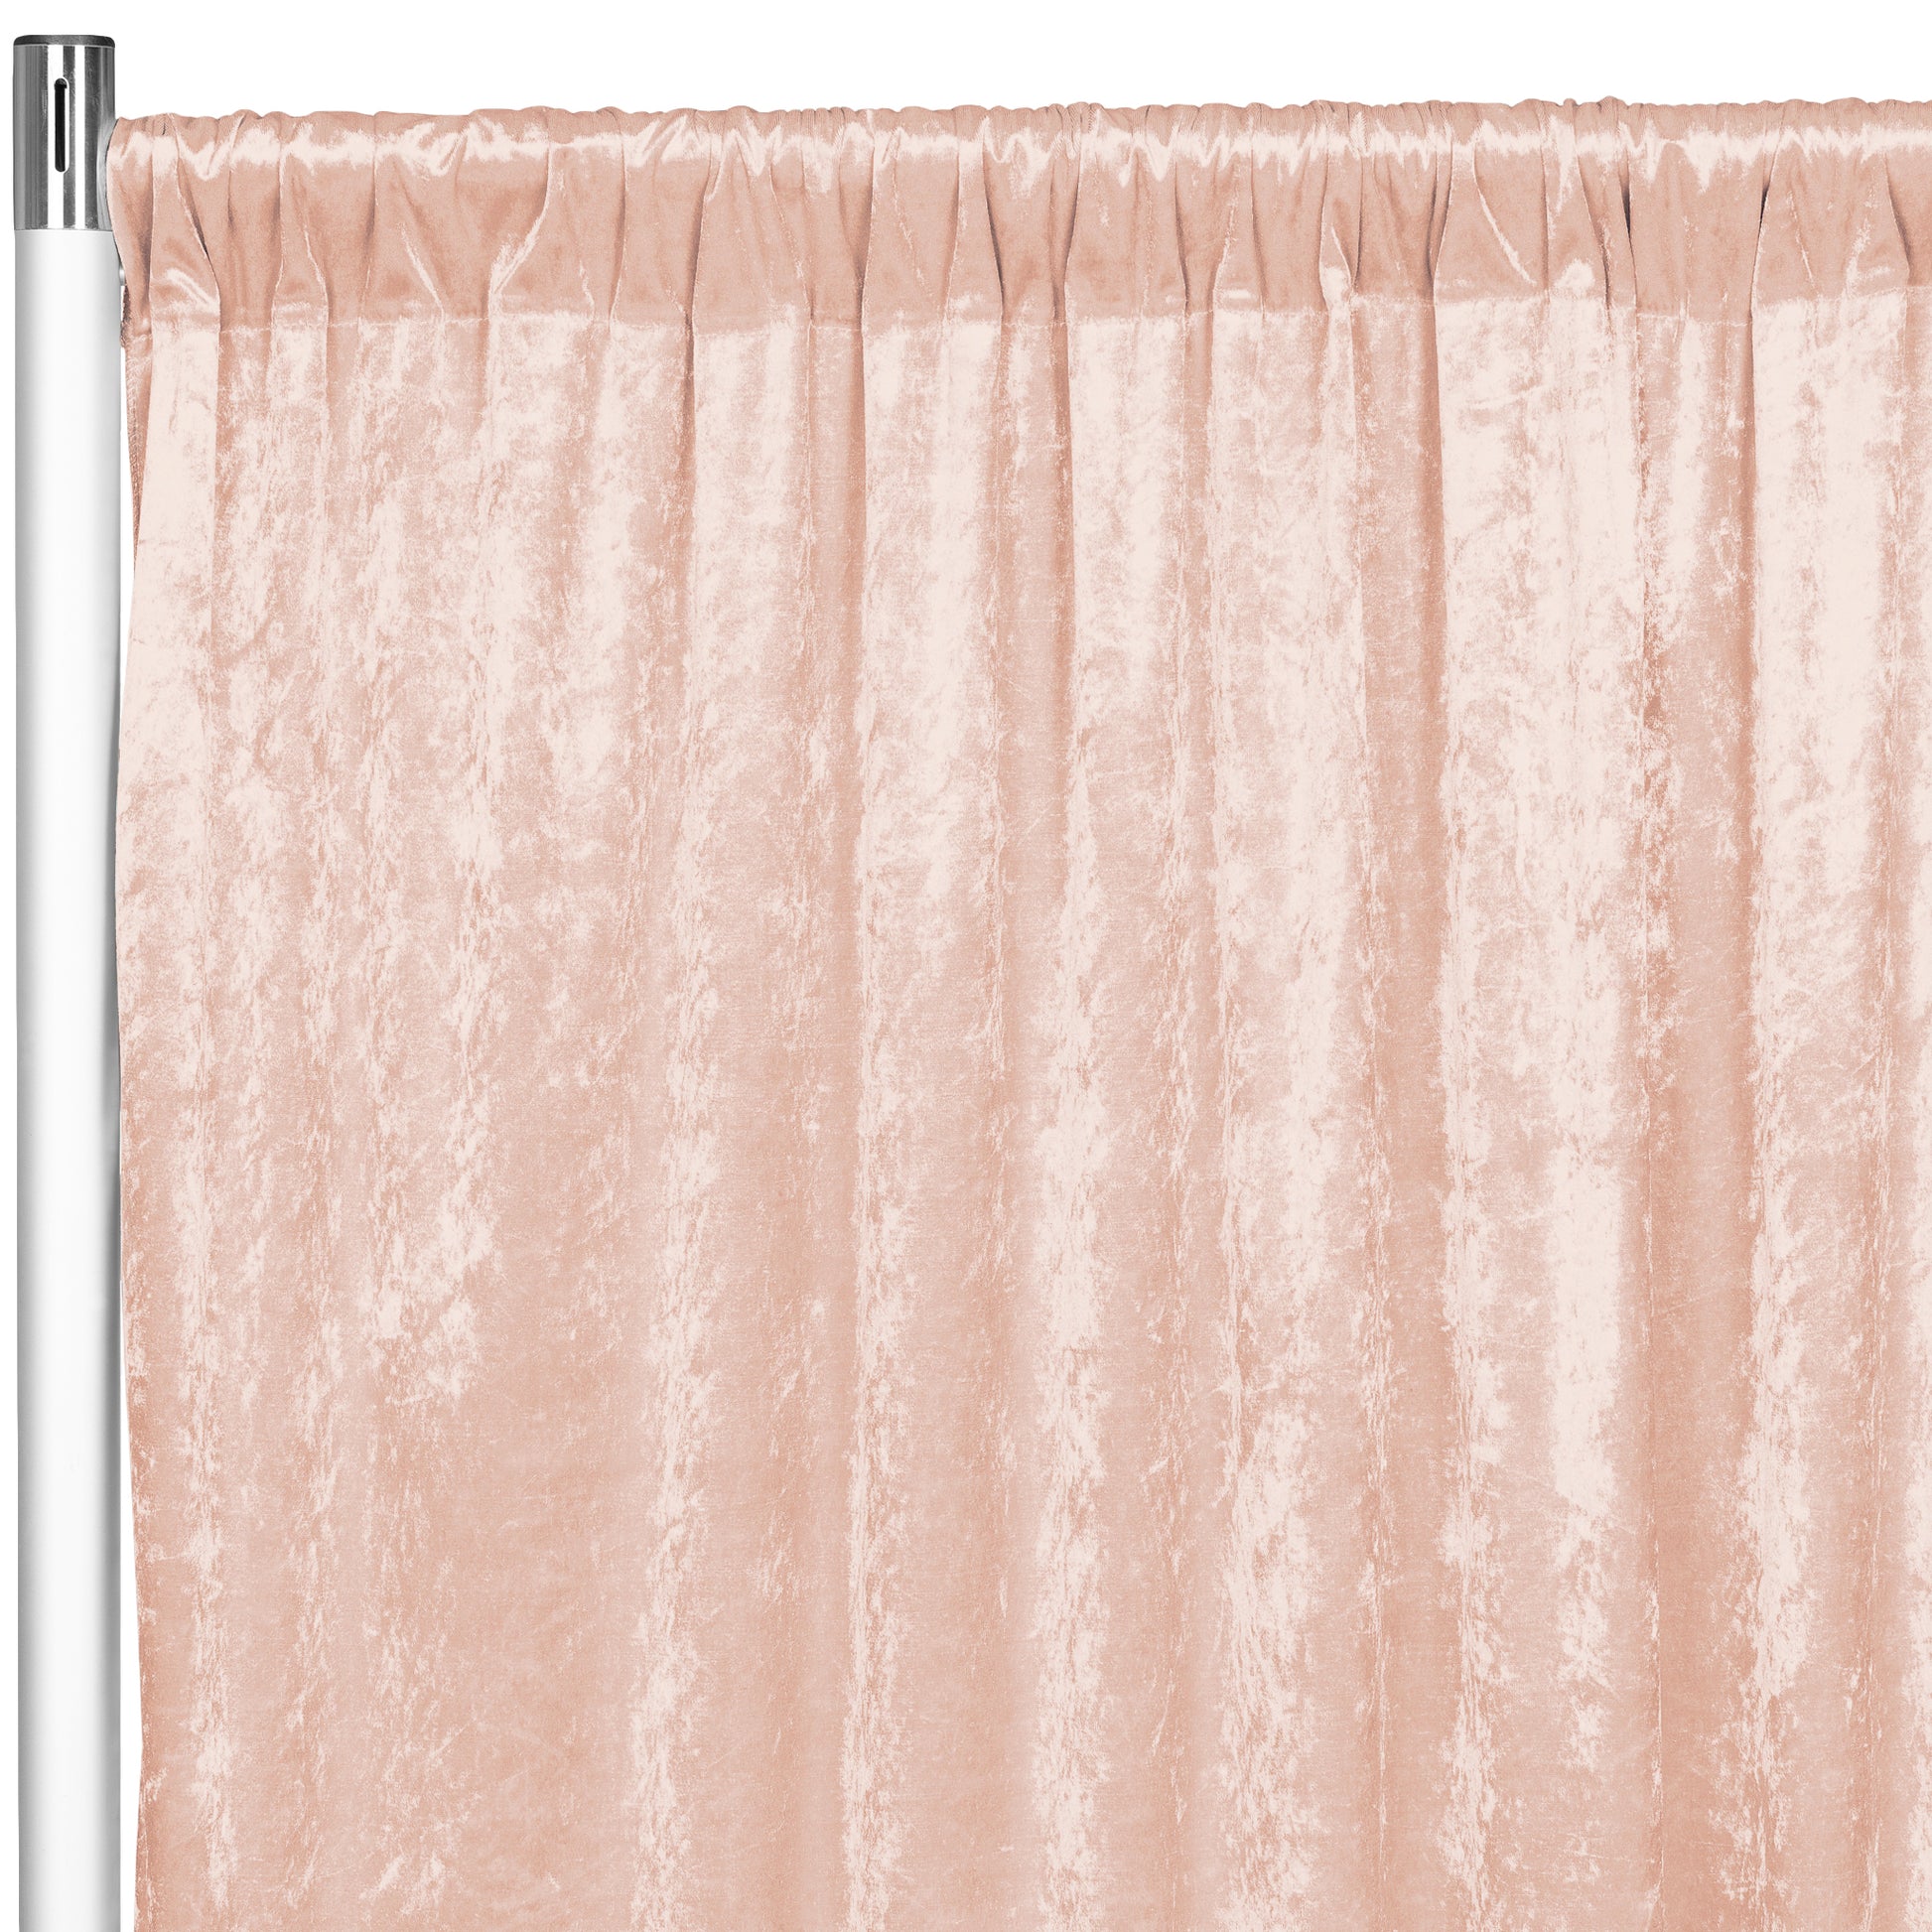 Velvet 14ft H x 52" W Drape/Backdrop Curtain Panel - Blush/Rose Gold